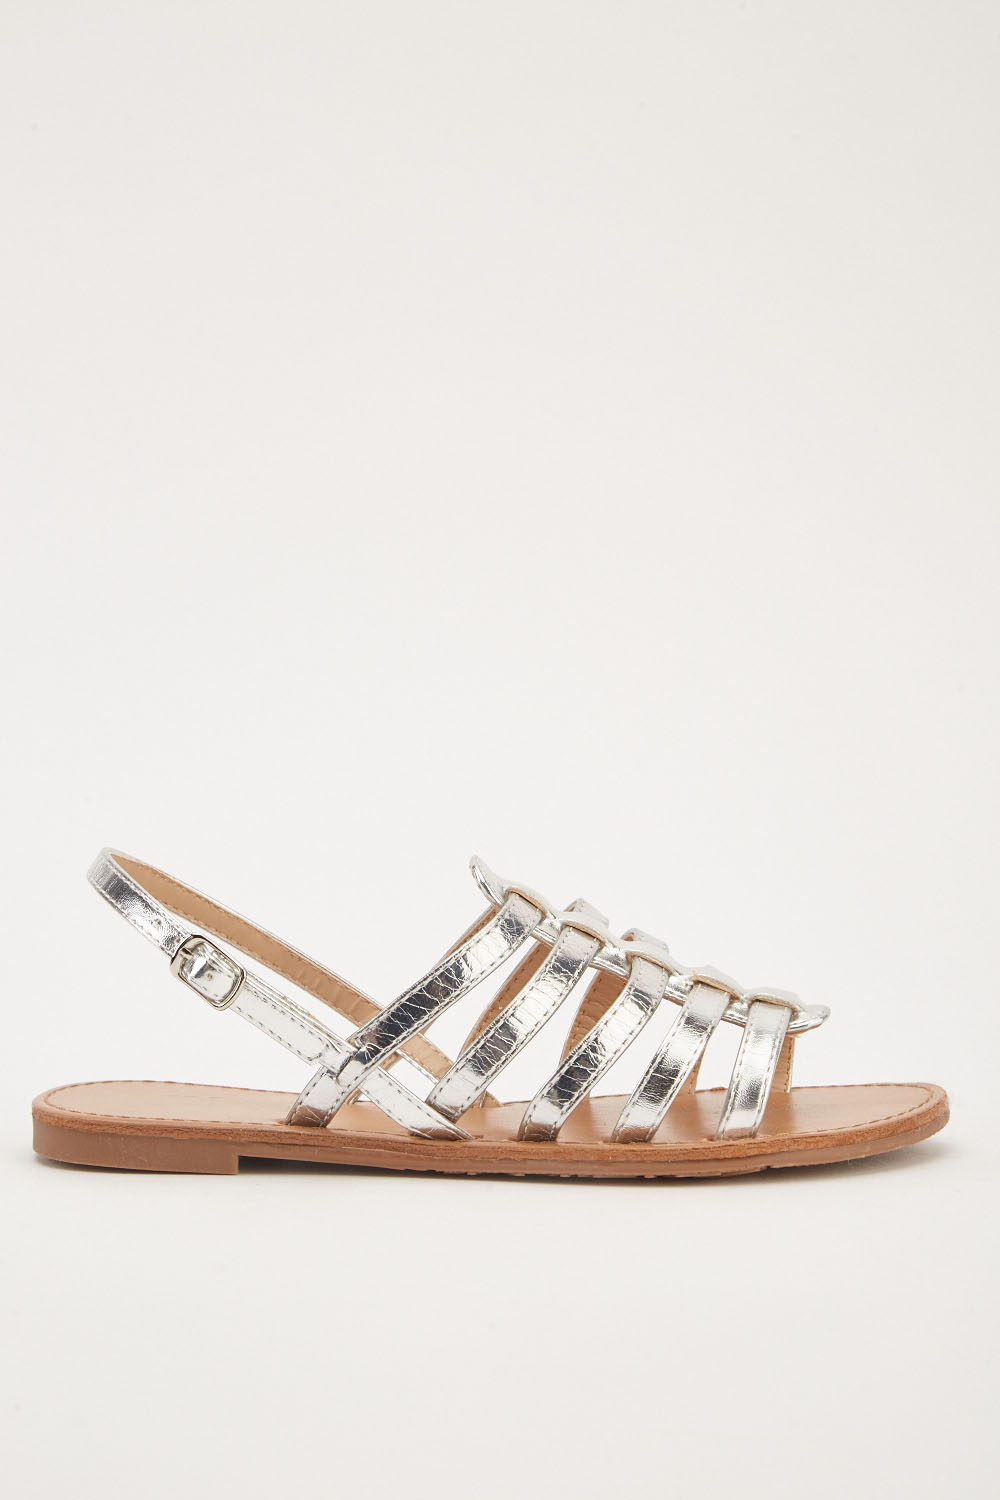 Metallic Strappy Flat Sandals - Just $7